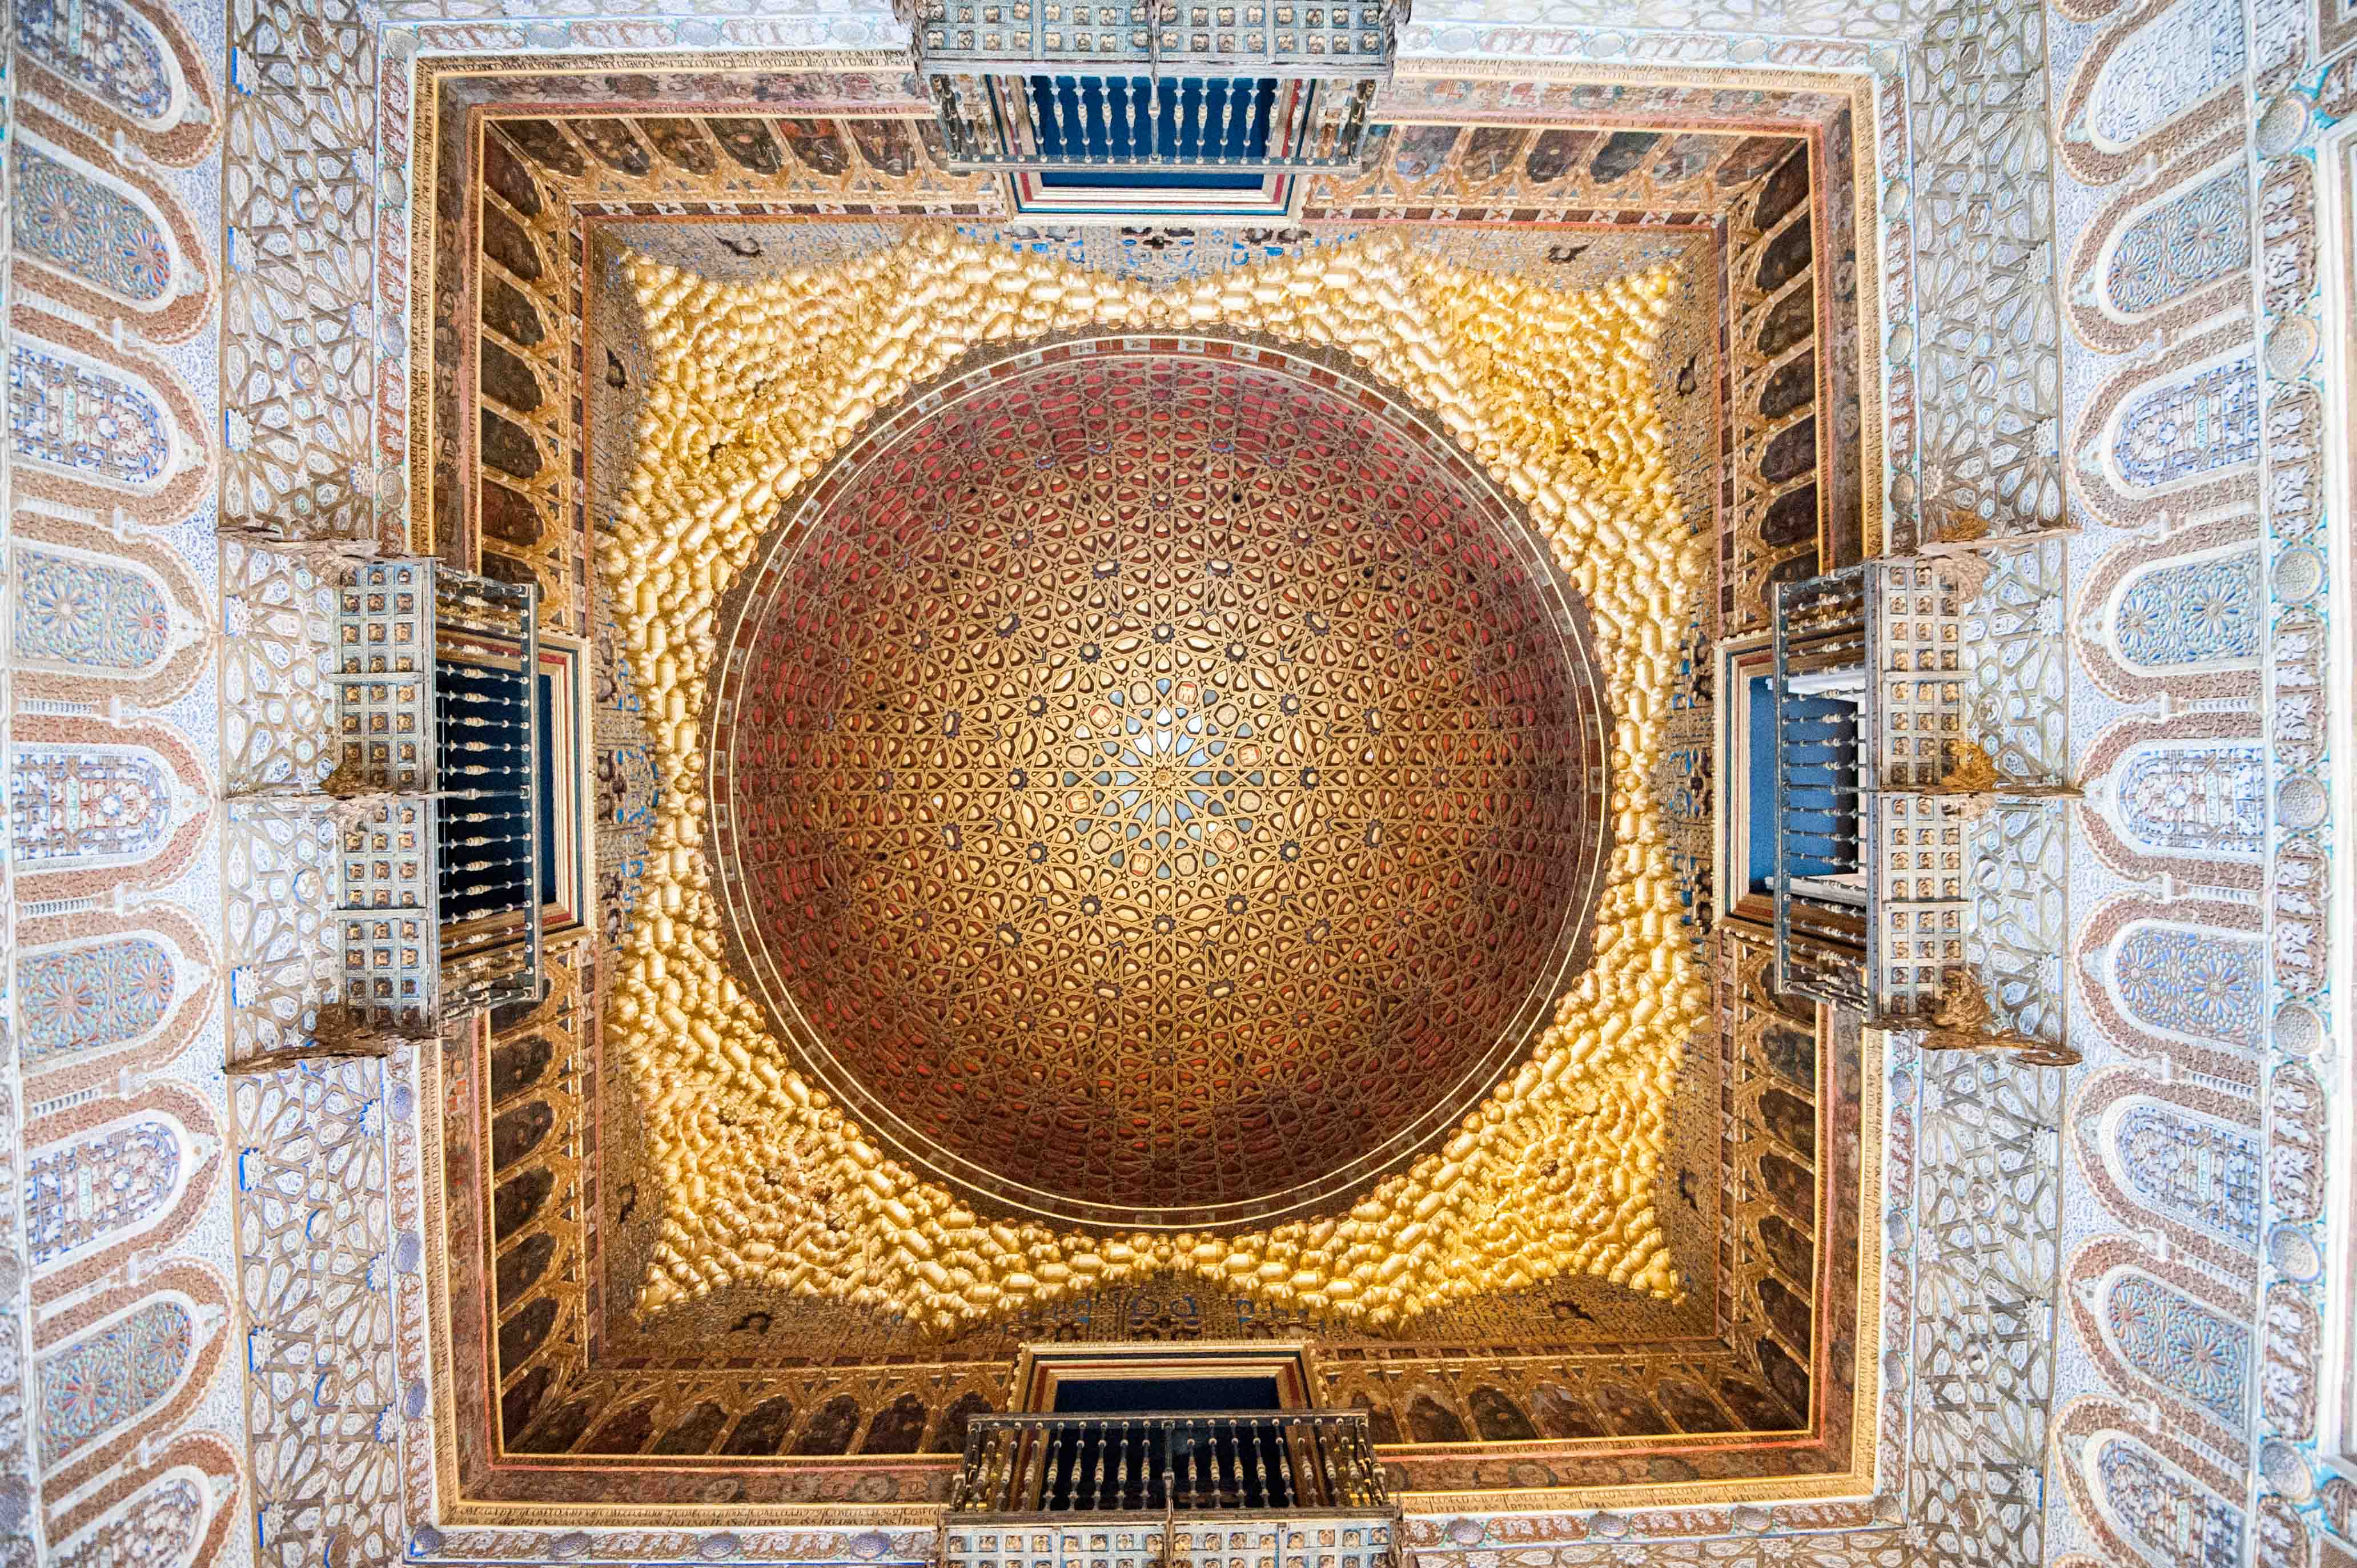 The Royal Alcazar in Seville, Spain